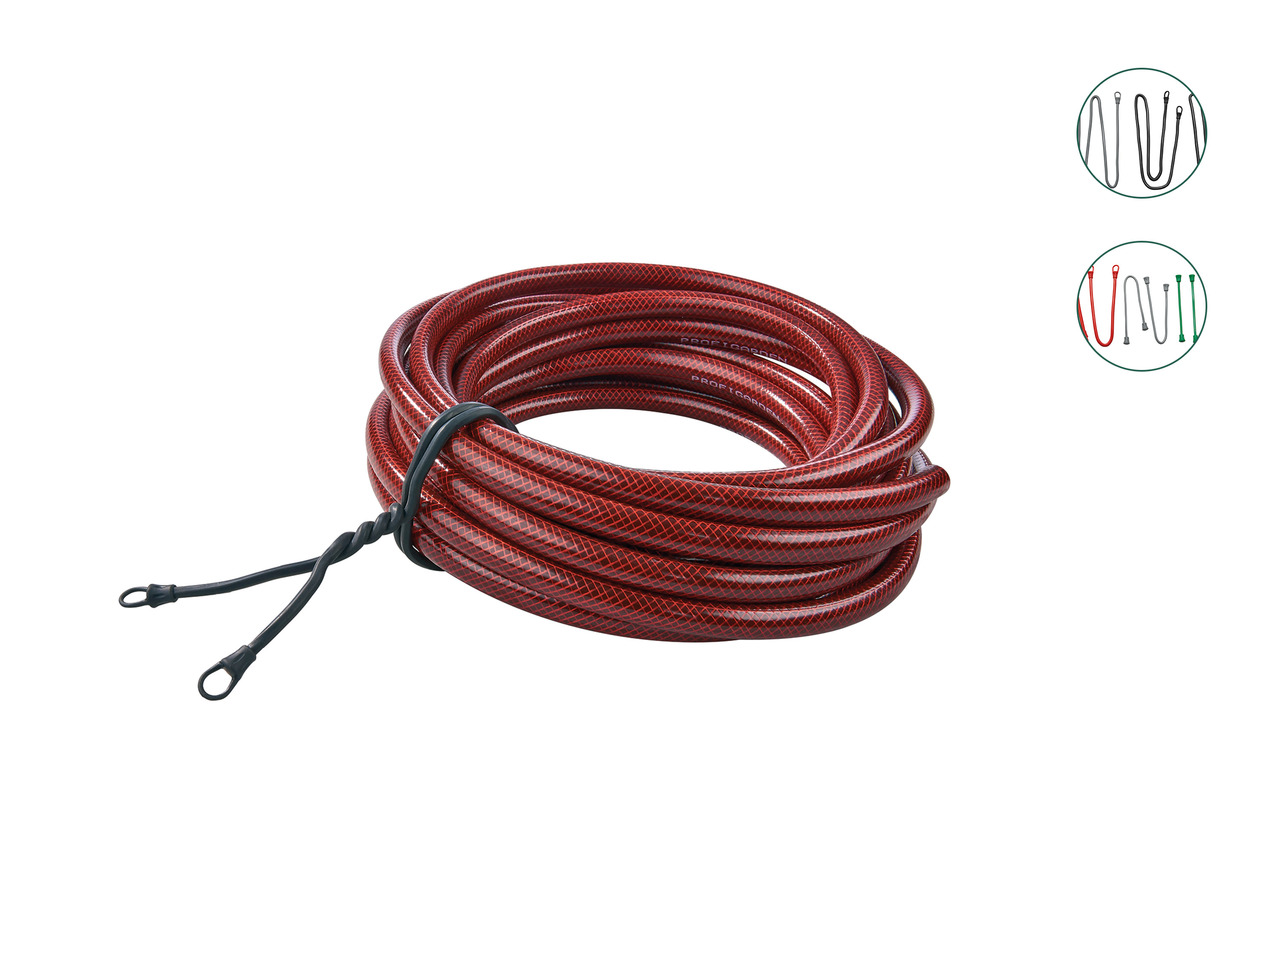 Powerfix Profi Flexible Cable Ties1